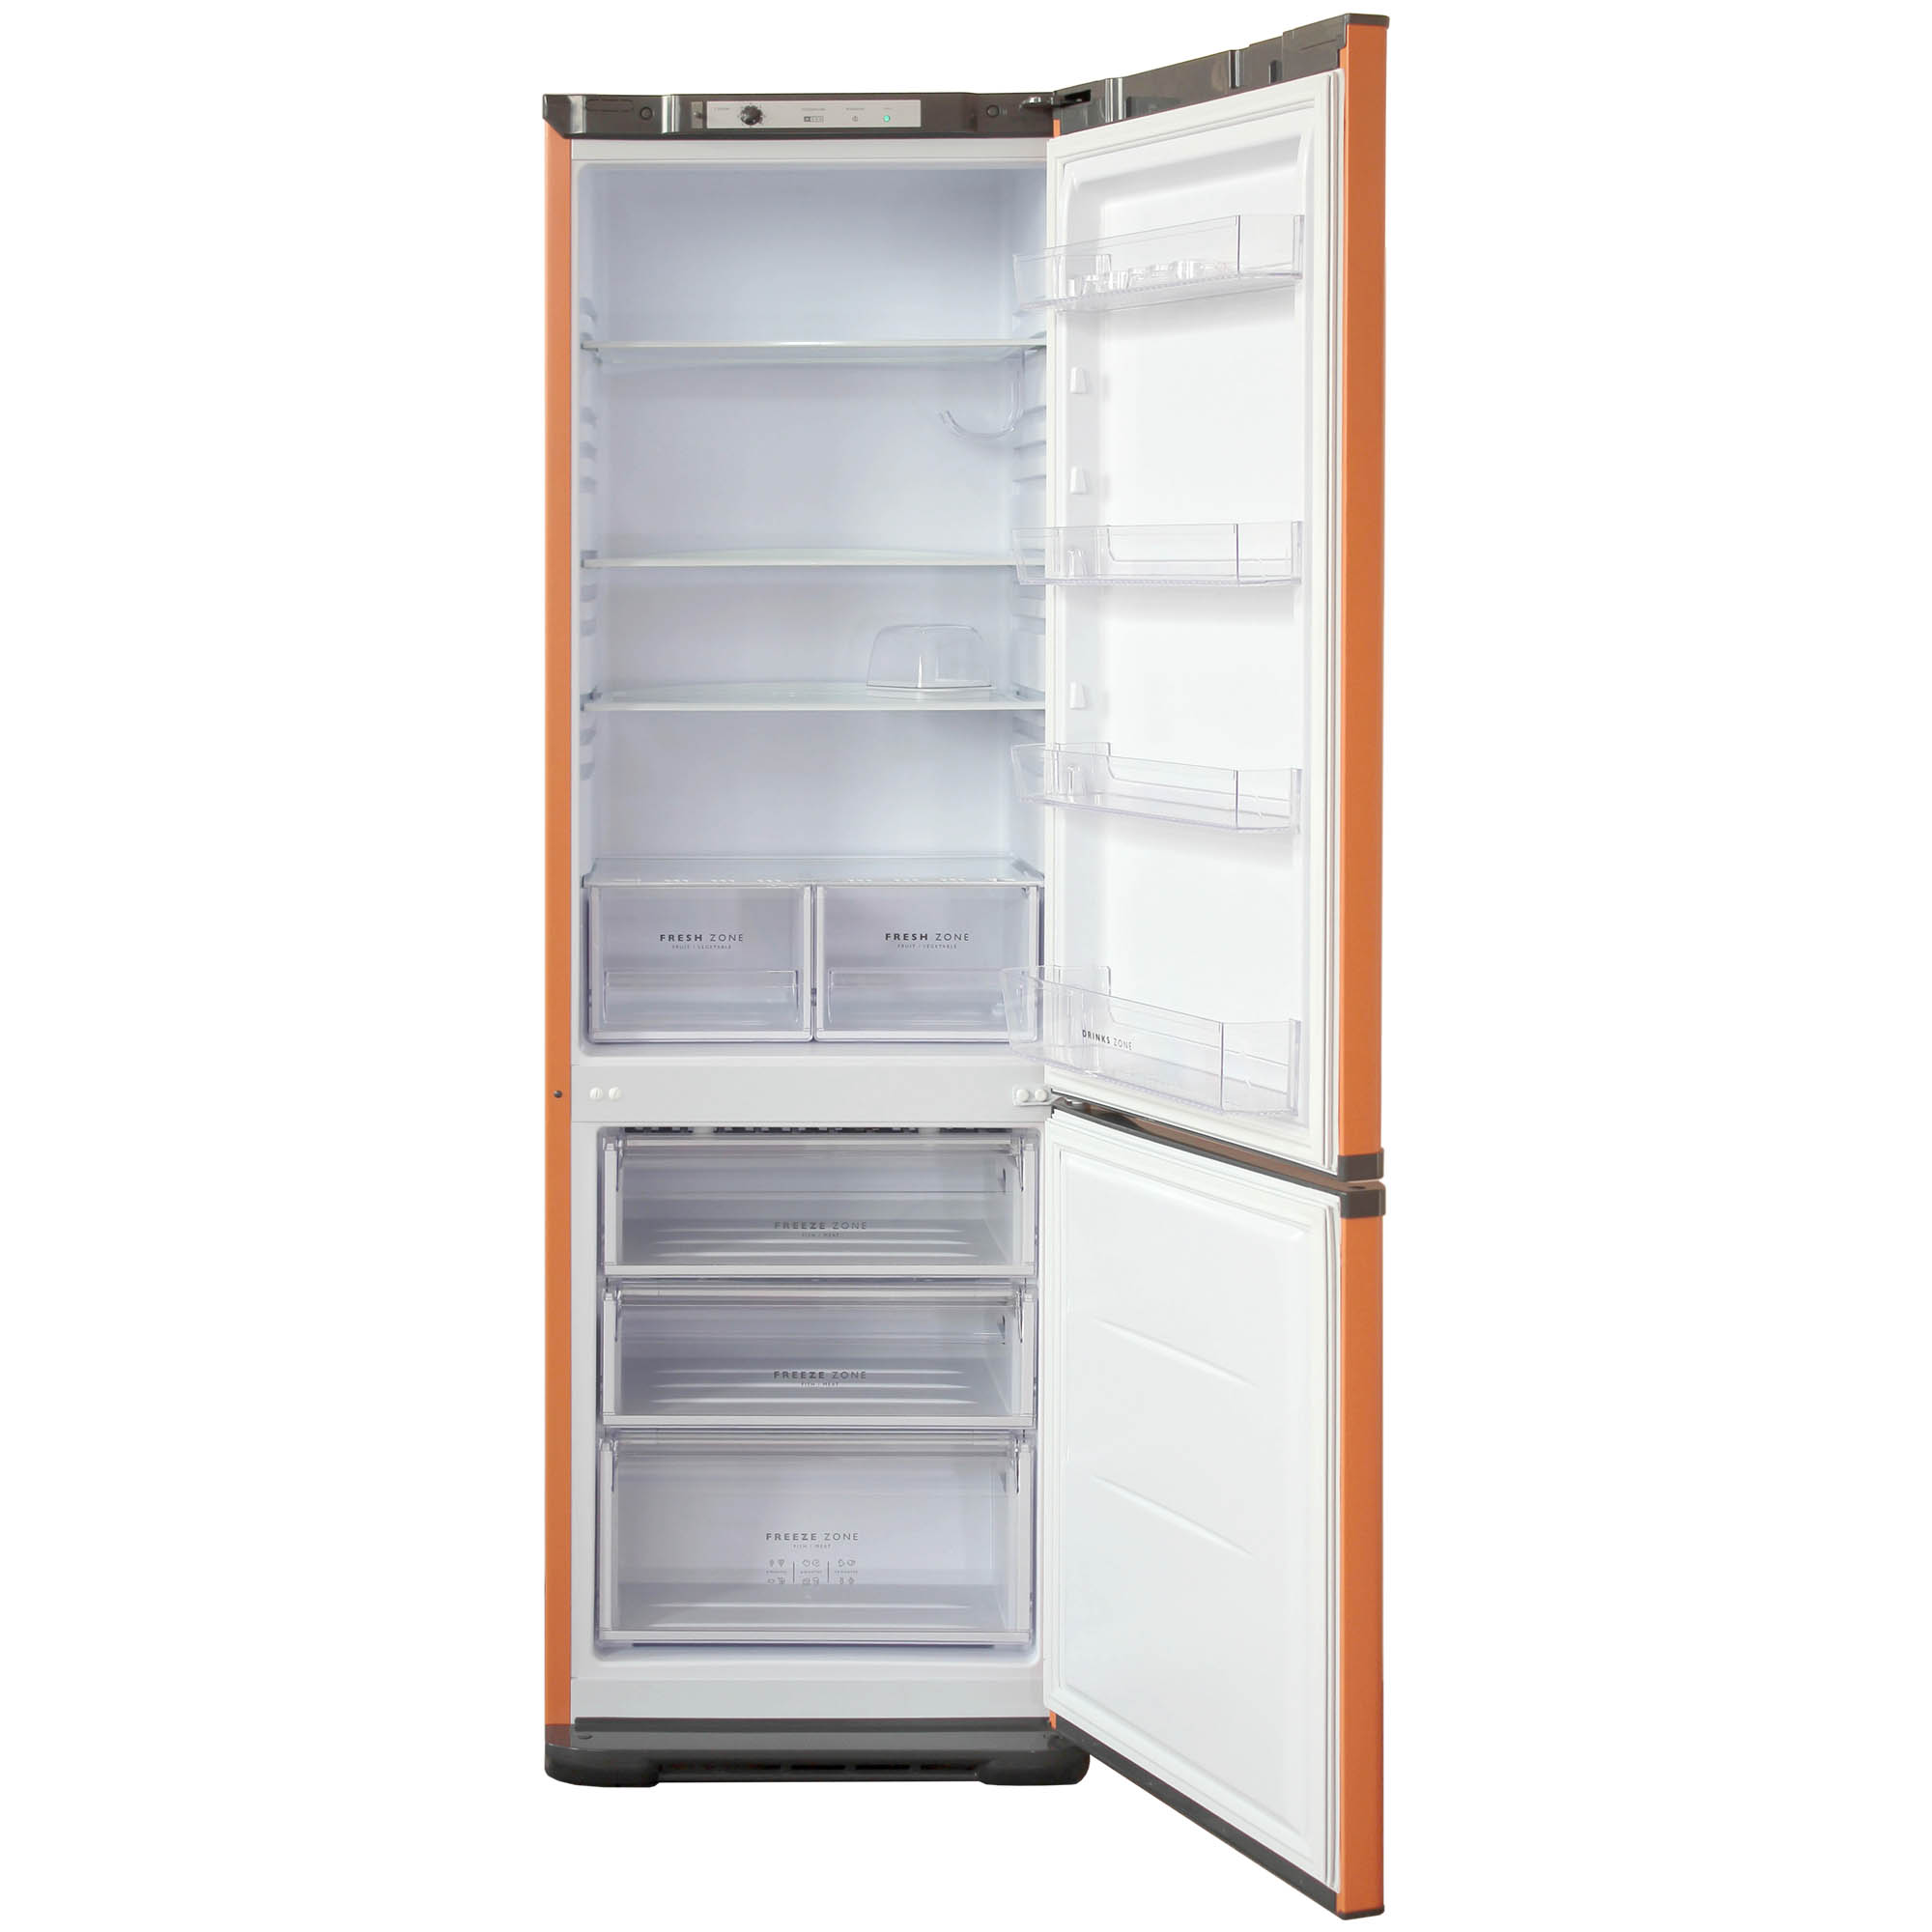 Бирюса 380nf. Холодильник Бирюса t340nf оранжевый. Бирюса t631 холодильник оранжевый. Холодильник 207 см Бирюса t380nf. Холодильник Бирюса 627.